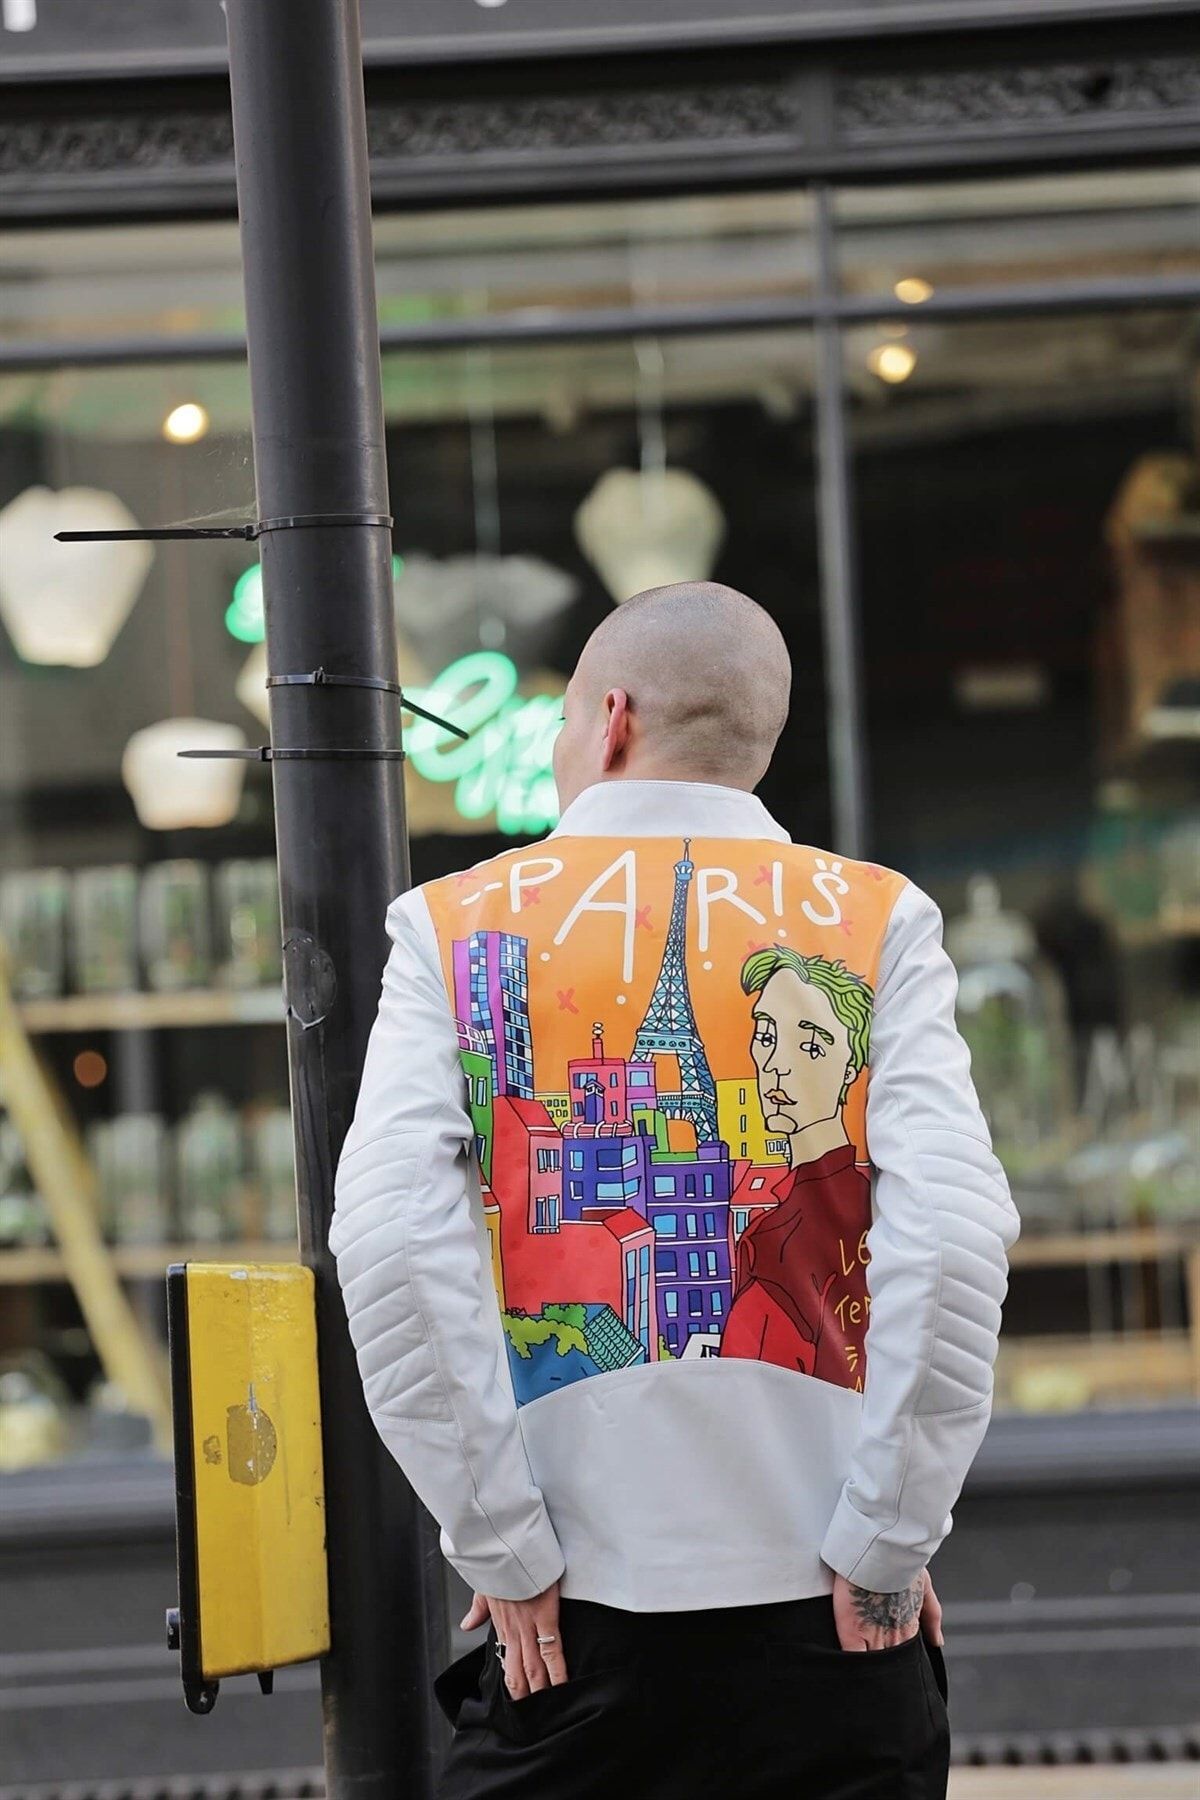 Deriderim کت چرم اصل مردانه با خط زیپ دار چاپ دیجیتال طراحی ویژه ایکیگای پاریسی